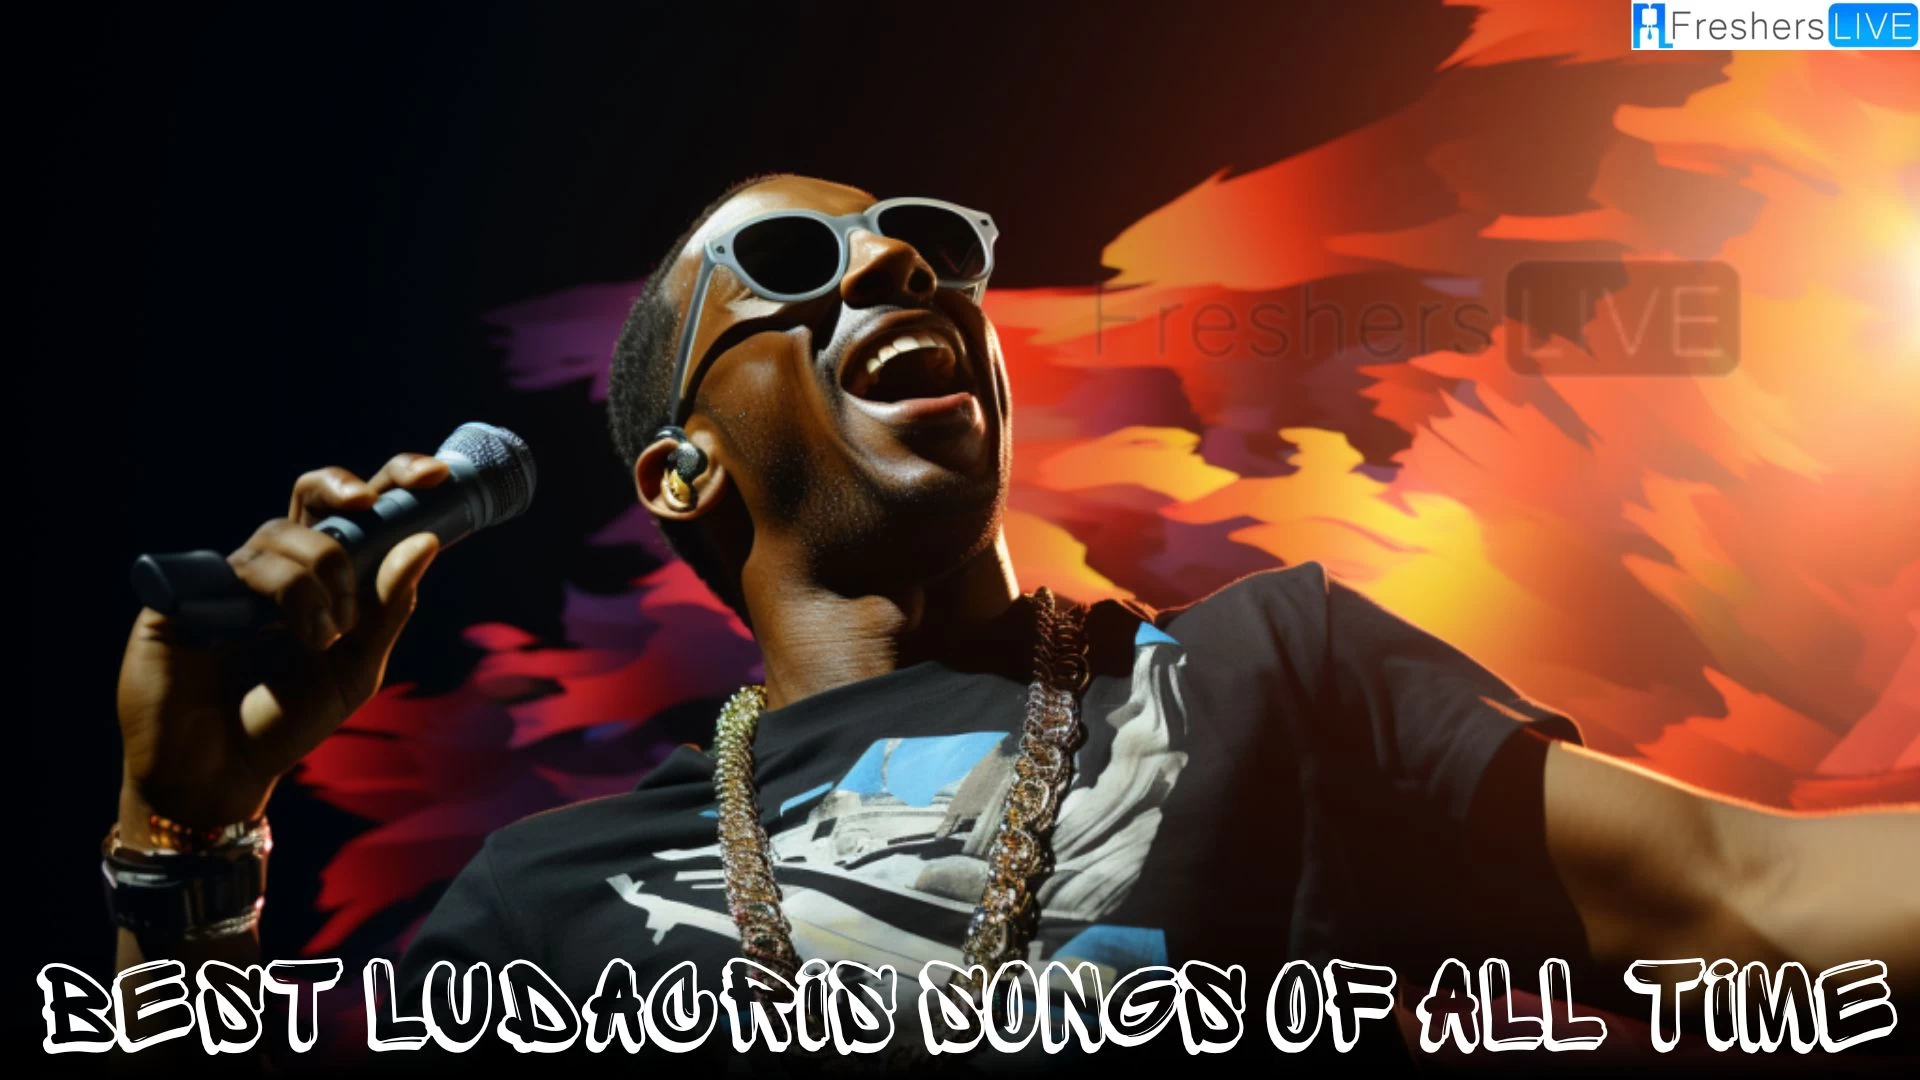 Best Ludacris Songs of All Time: Ultimate Top 10 Hip-Hop Hits